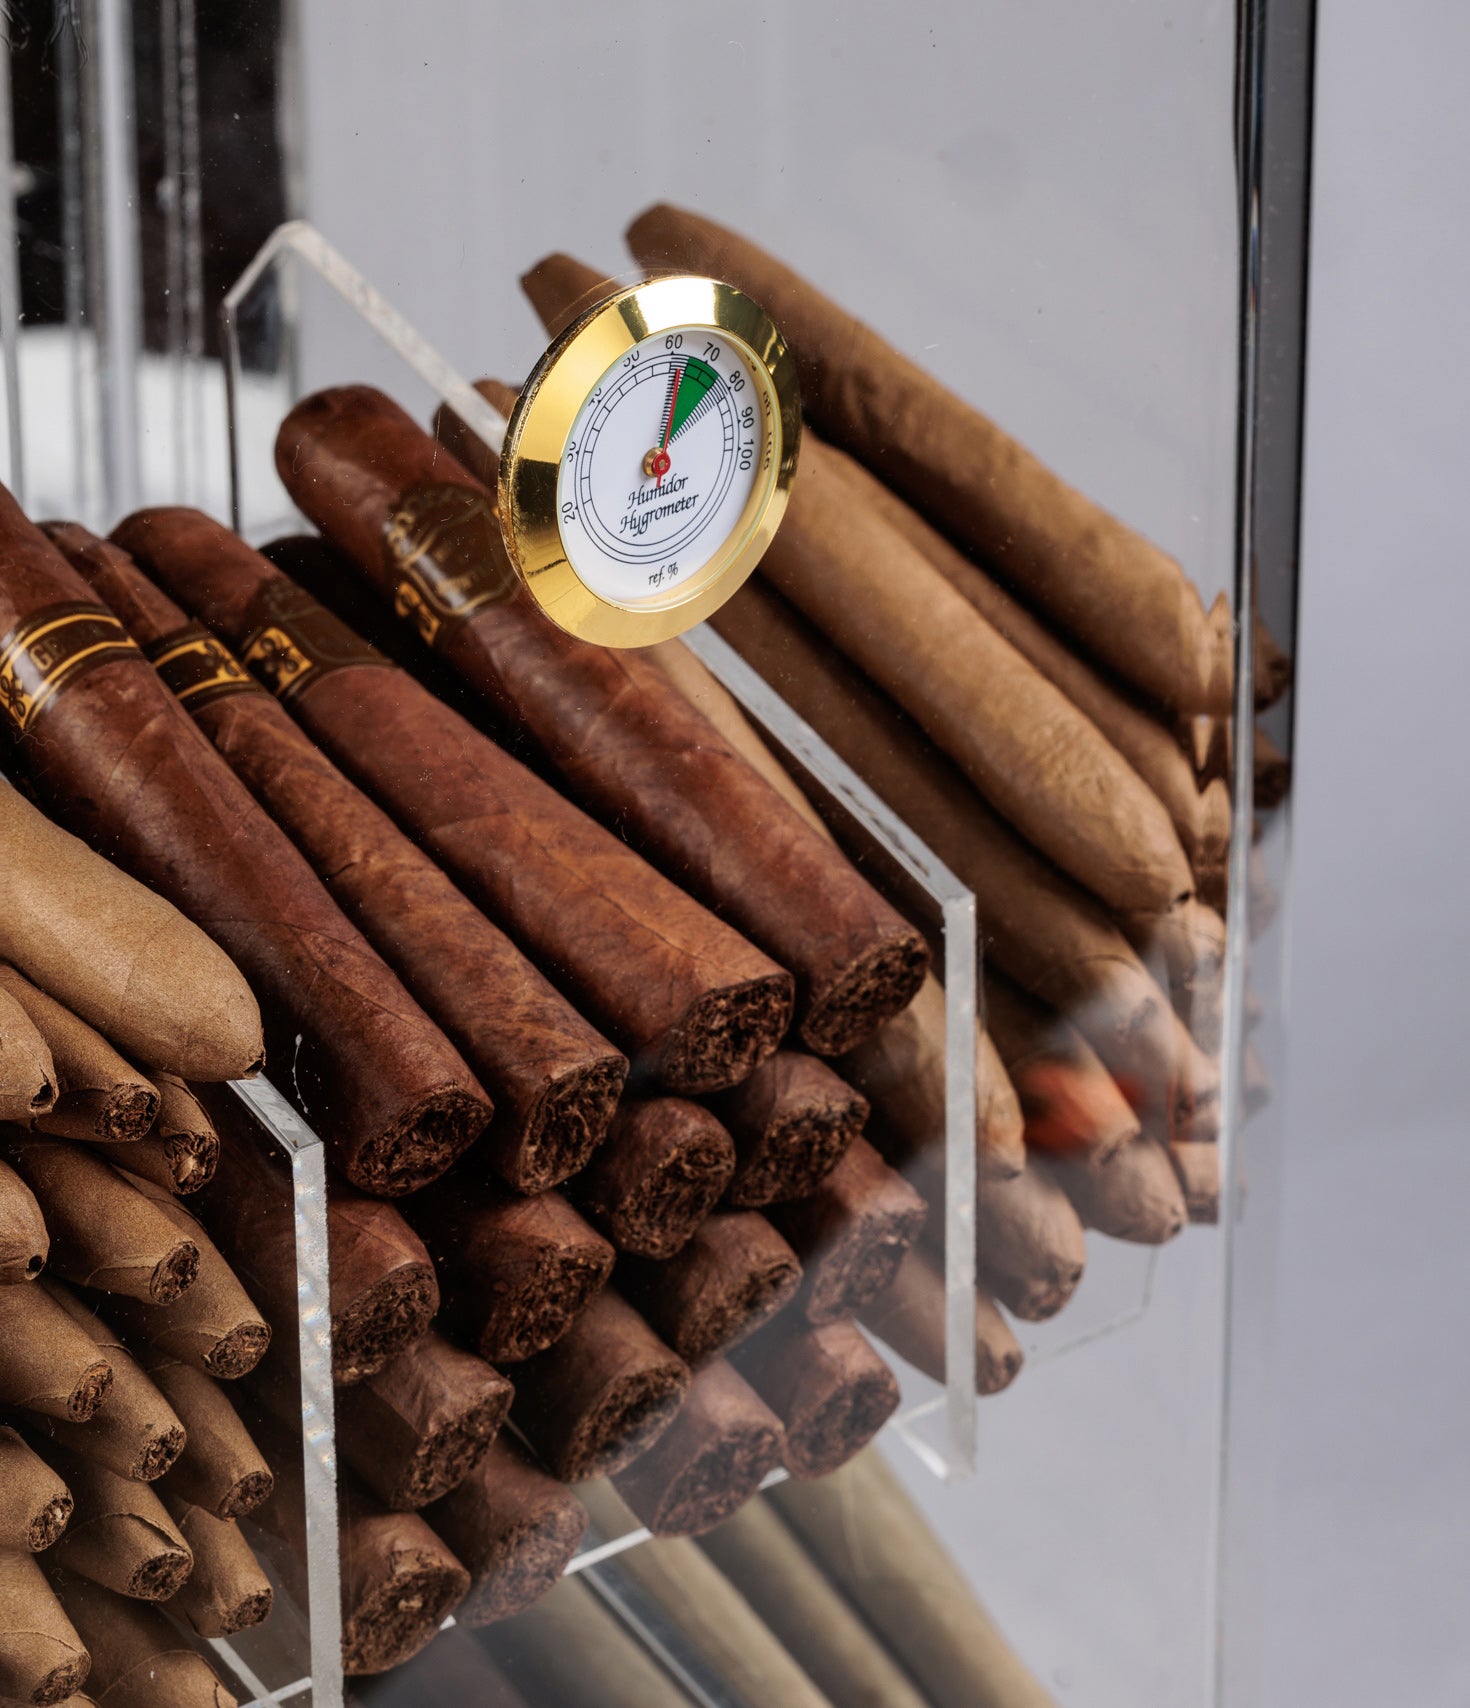 The Franklin Acrylic Display Humidor - Afterburner Cigar store